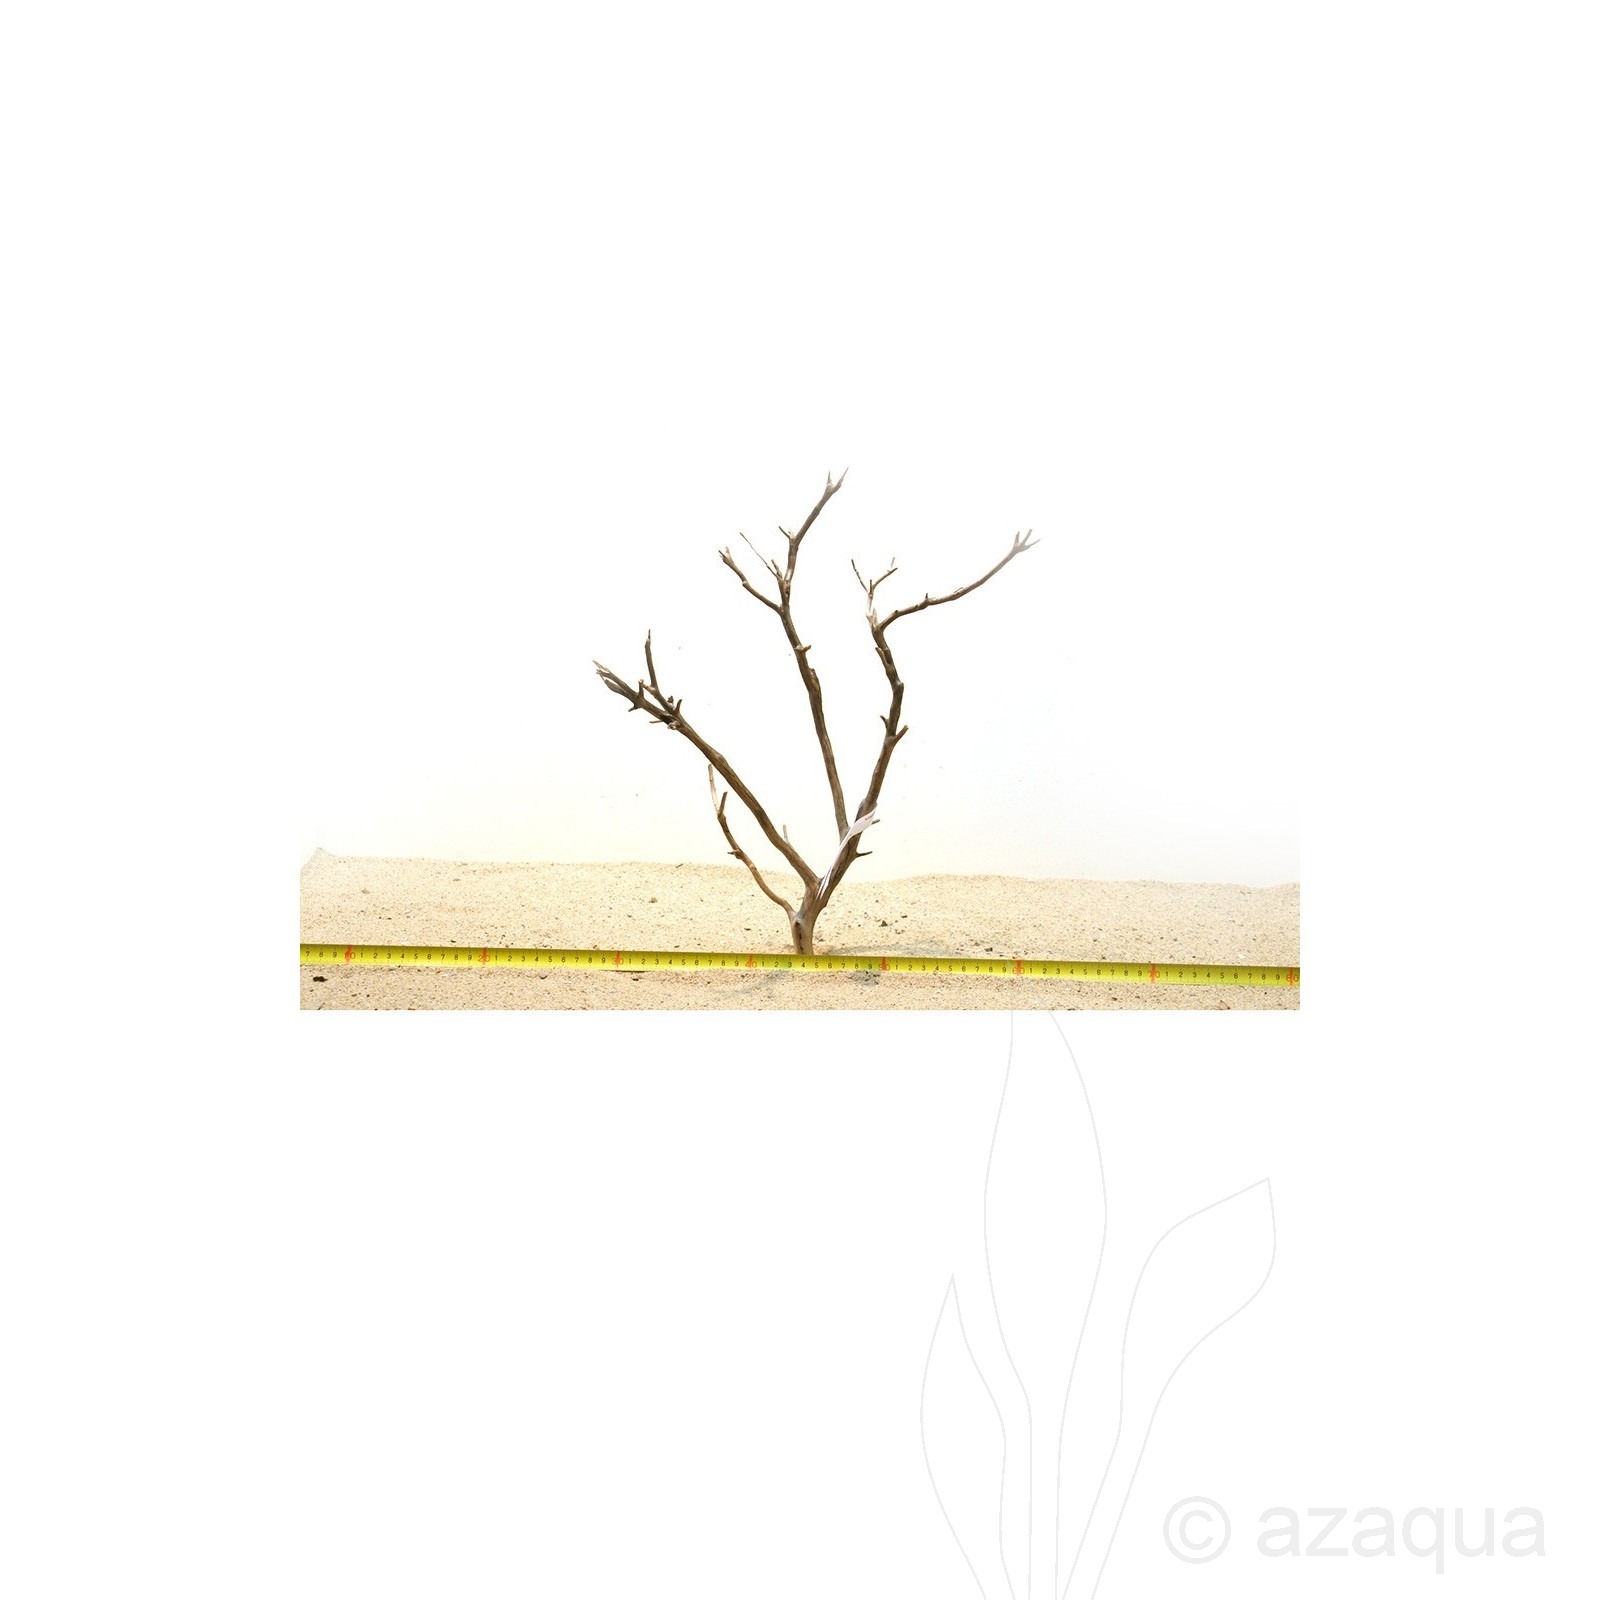 Manzanita hout S (30-40cm) - Manzanita Wood voor het aquarium